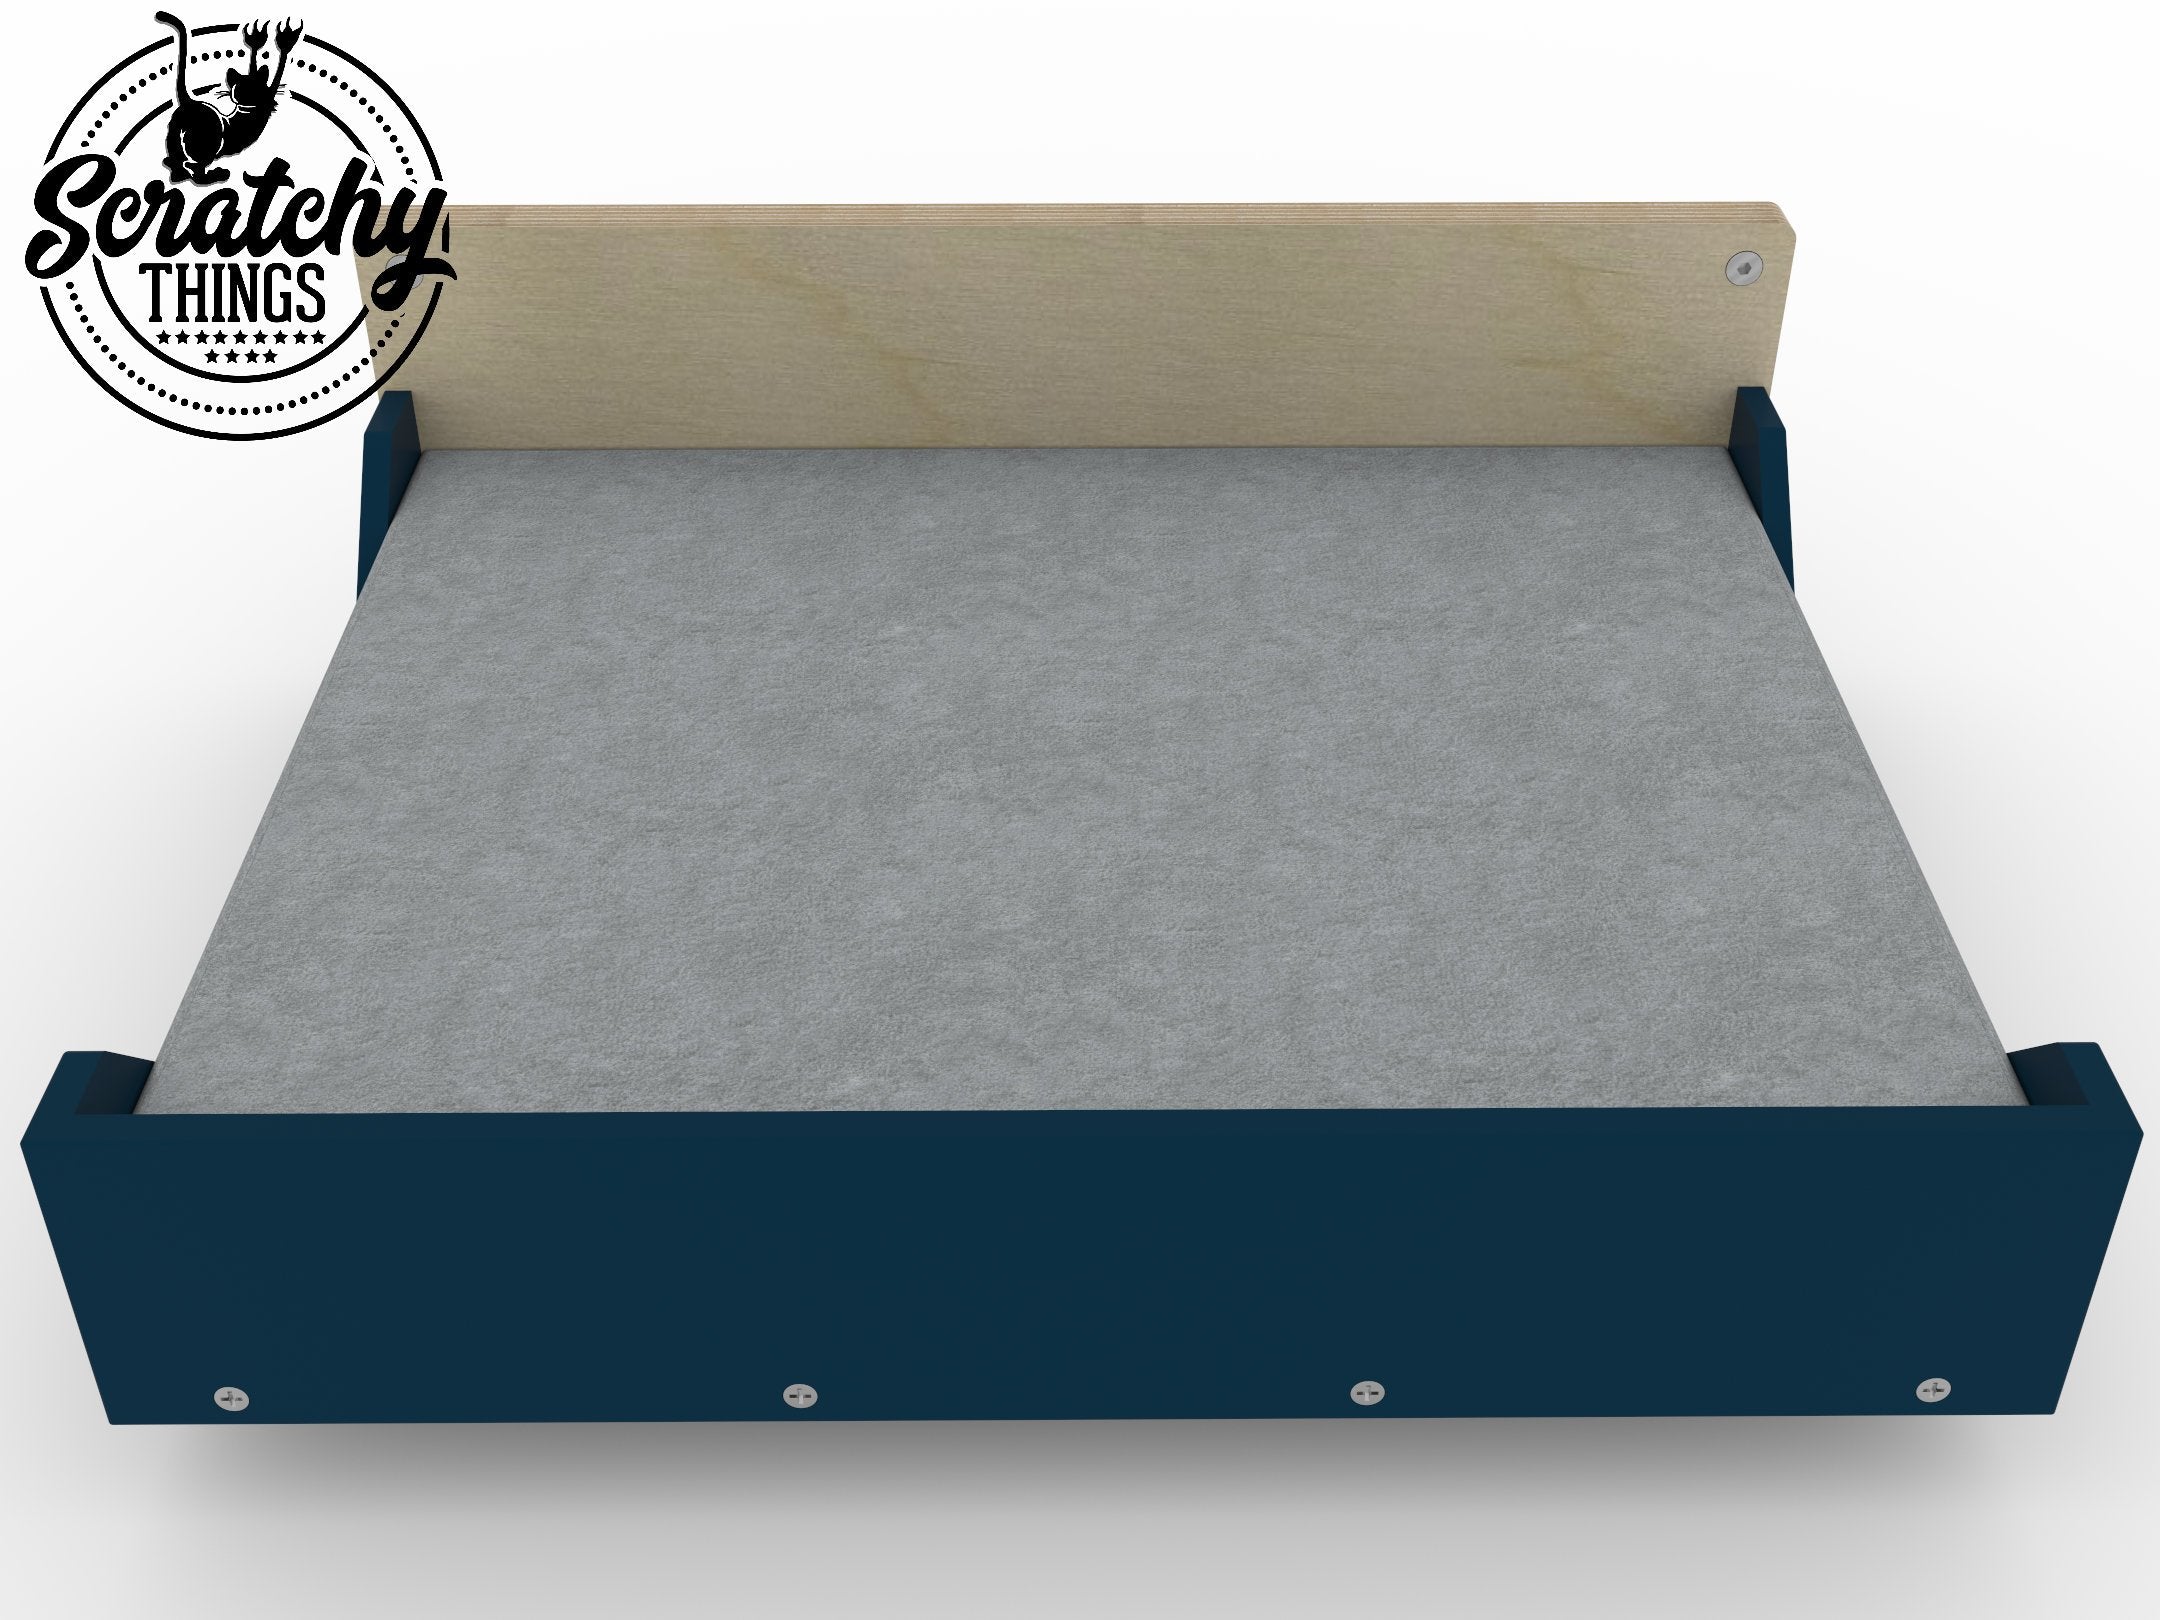 Big Cat Wall Shelf Bed Bundle - Wally BigCat Flat Plus Double Bundle - Scratchy Things Premium Pet Furniture